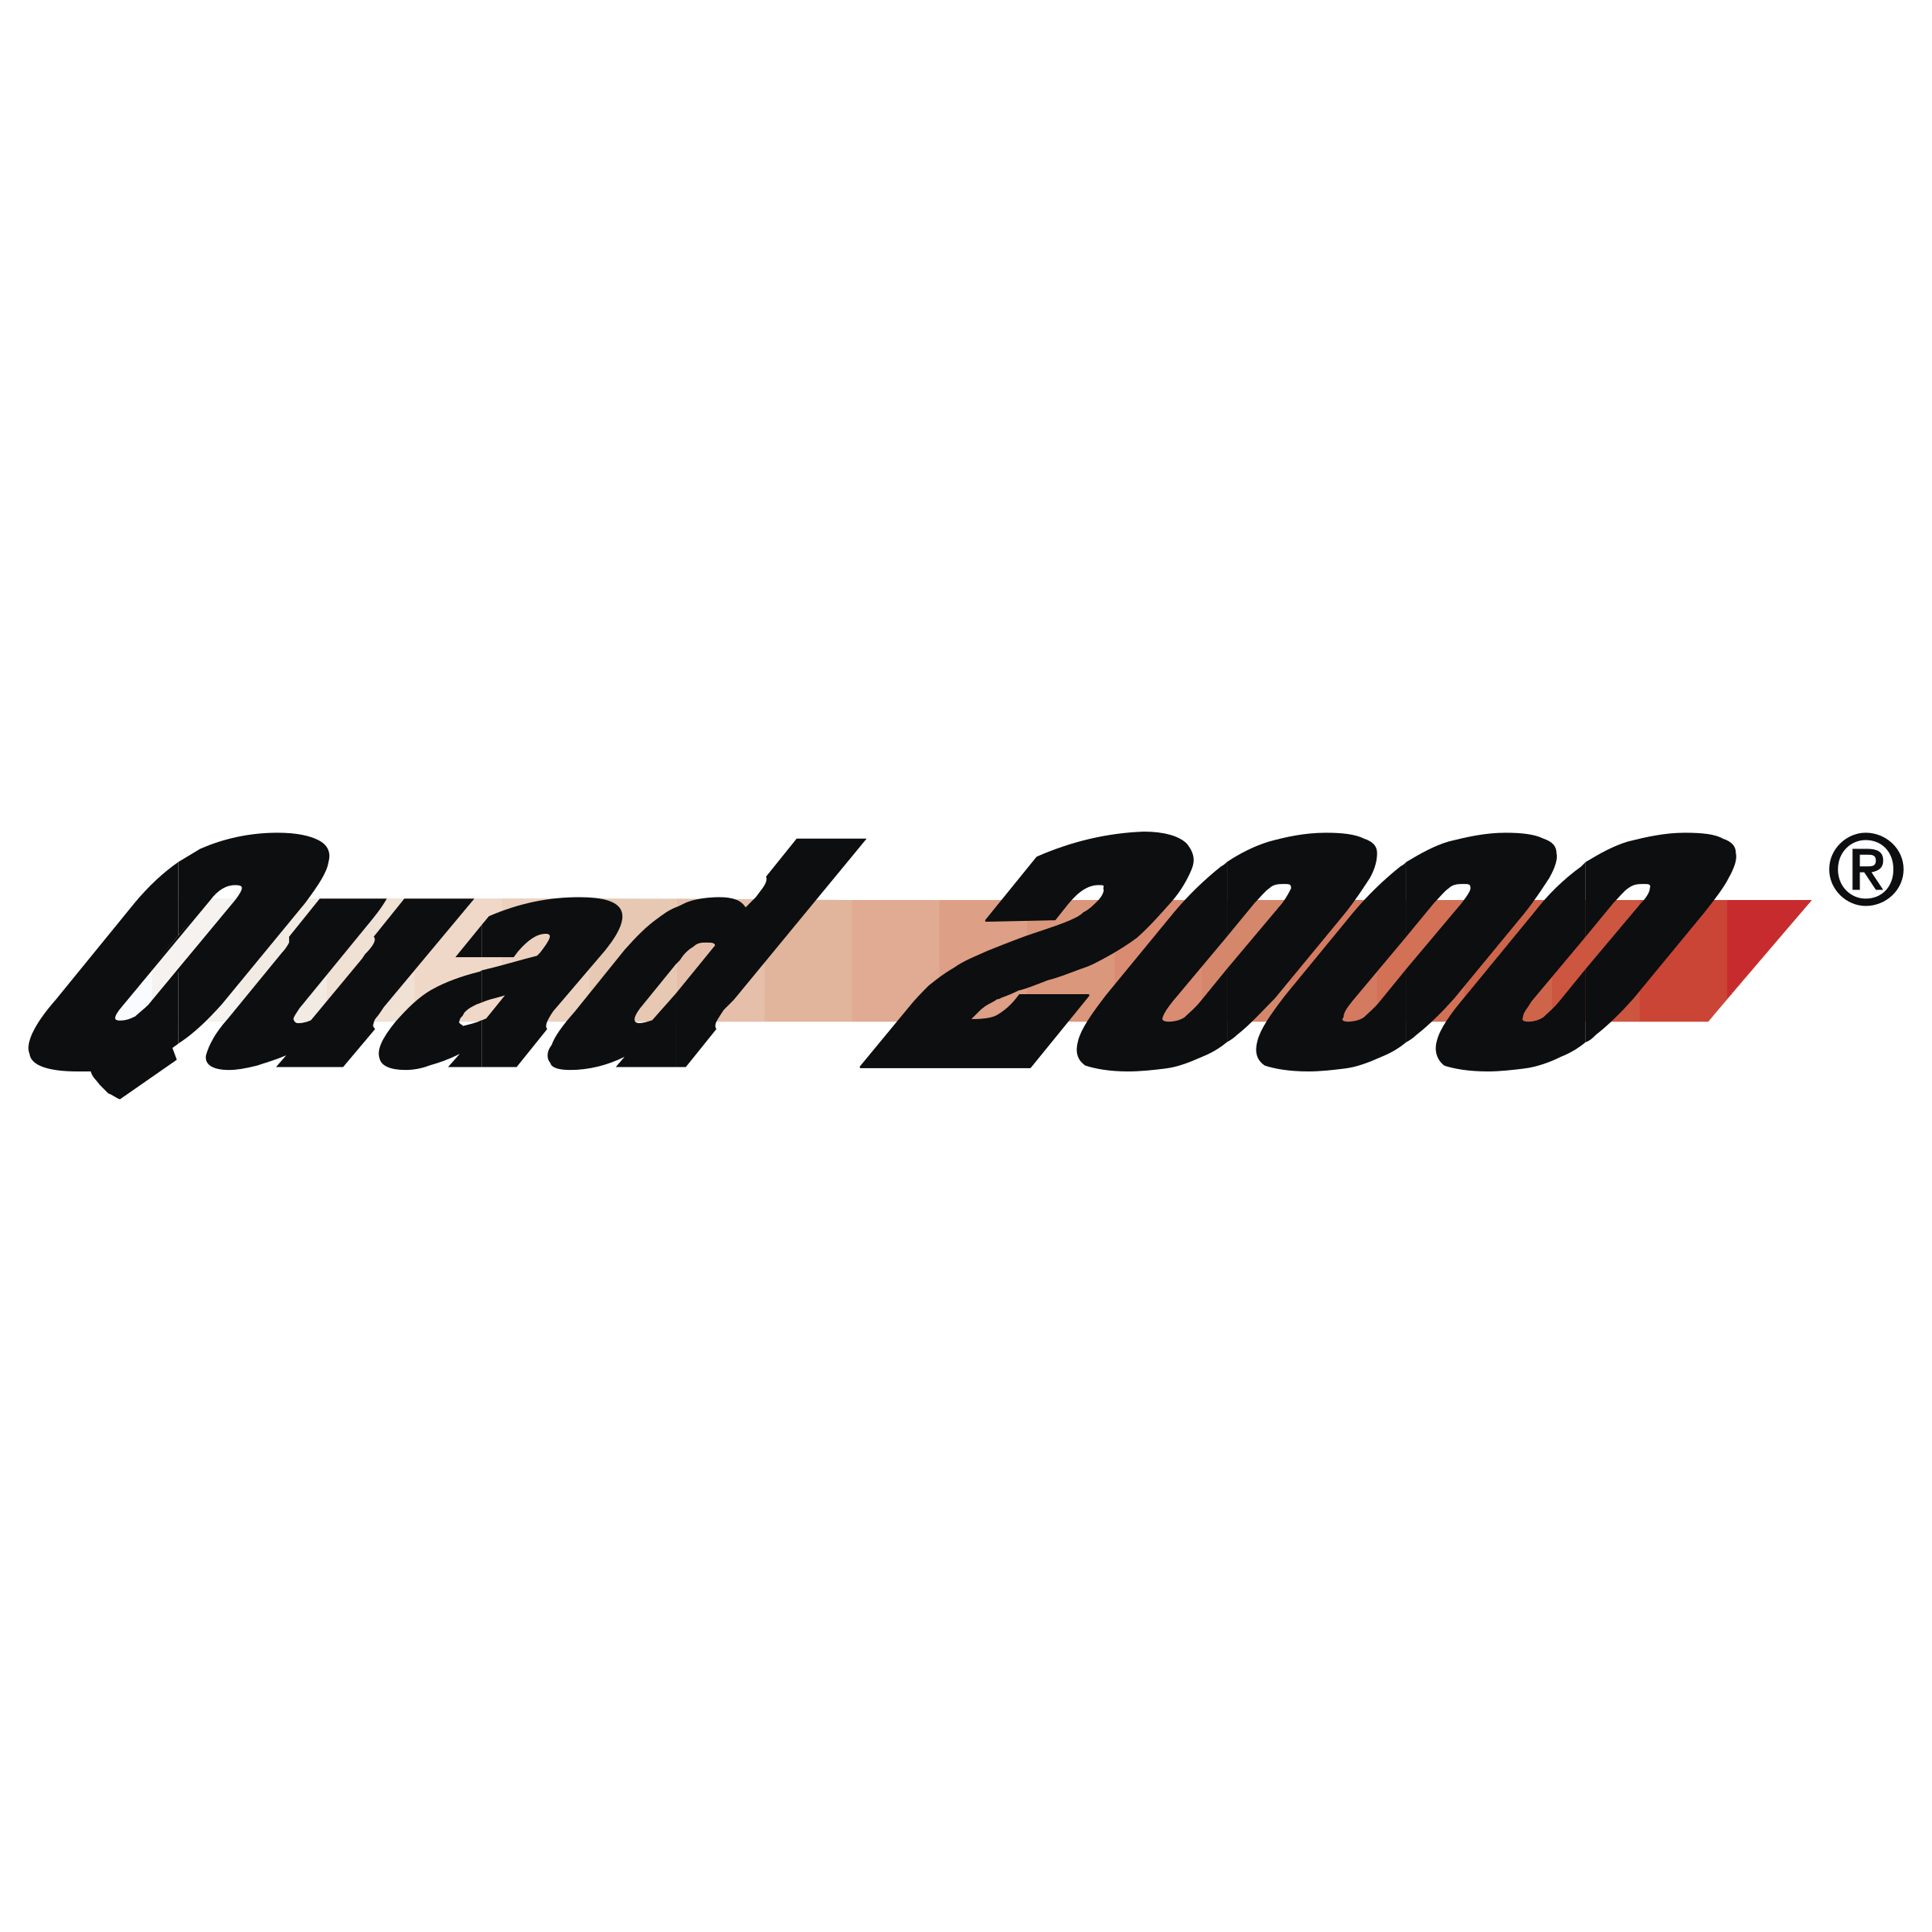 Quad Logo - Quad 2000 Logo PNG Transparent & SVG Vector